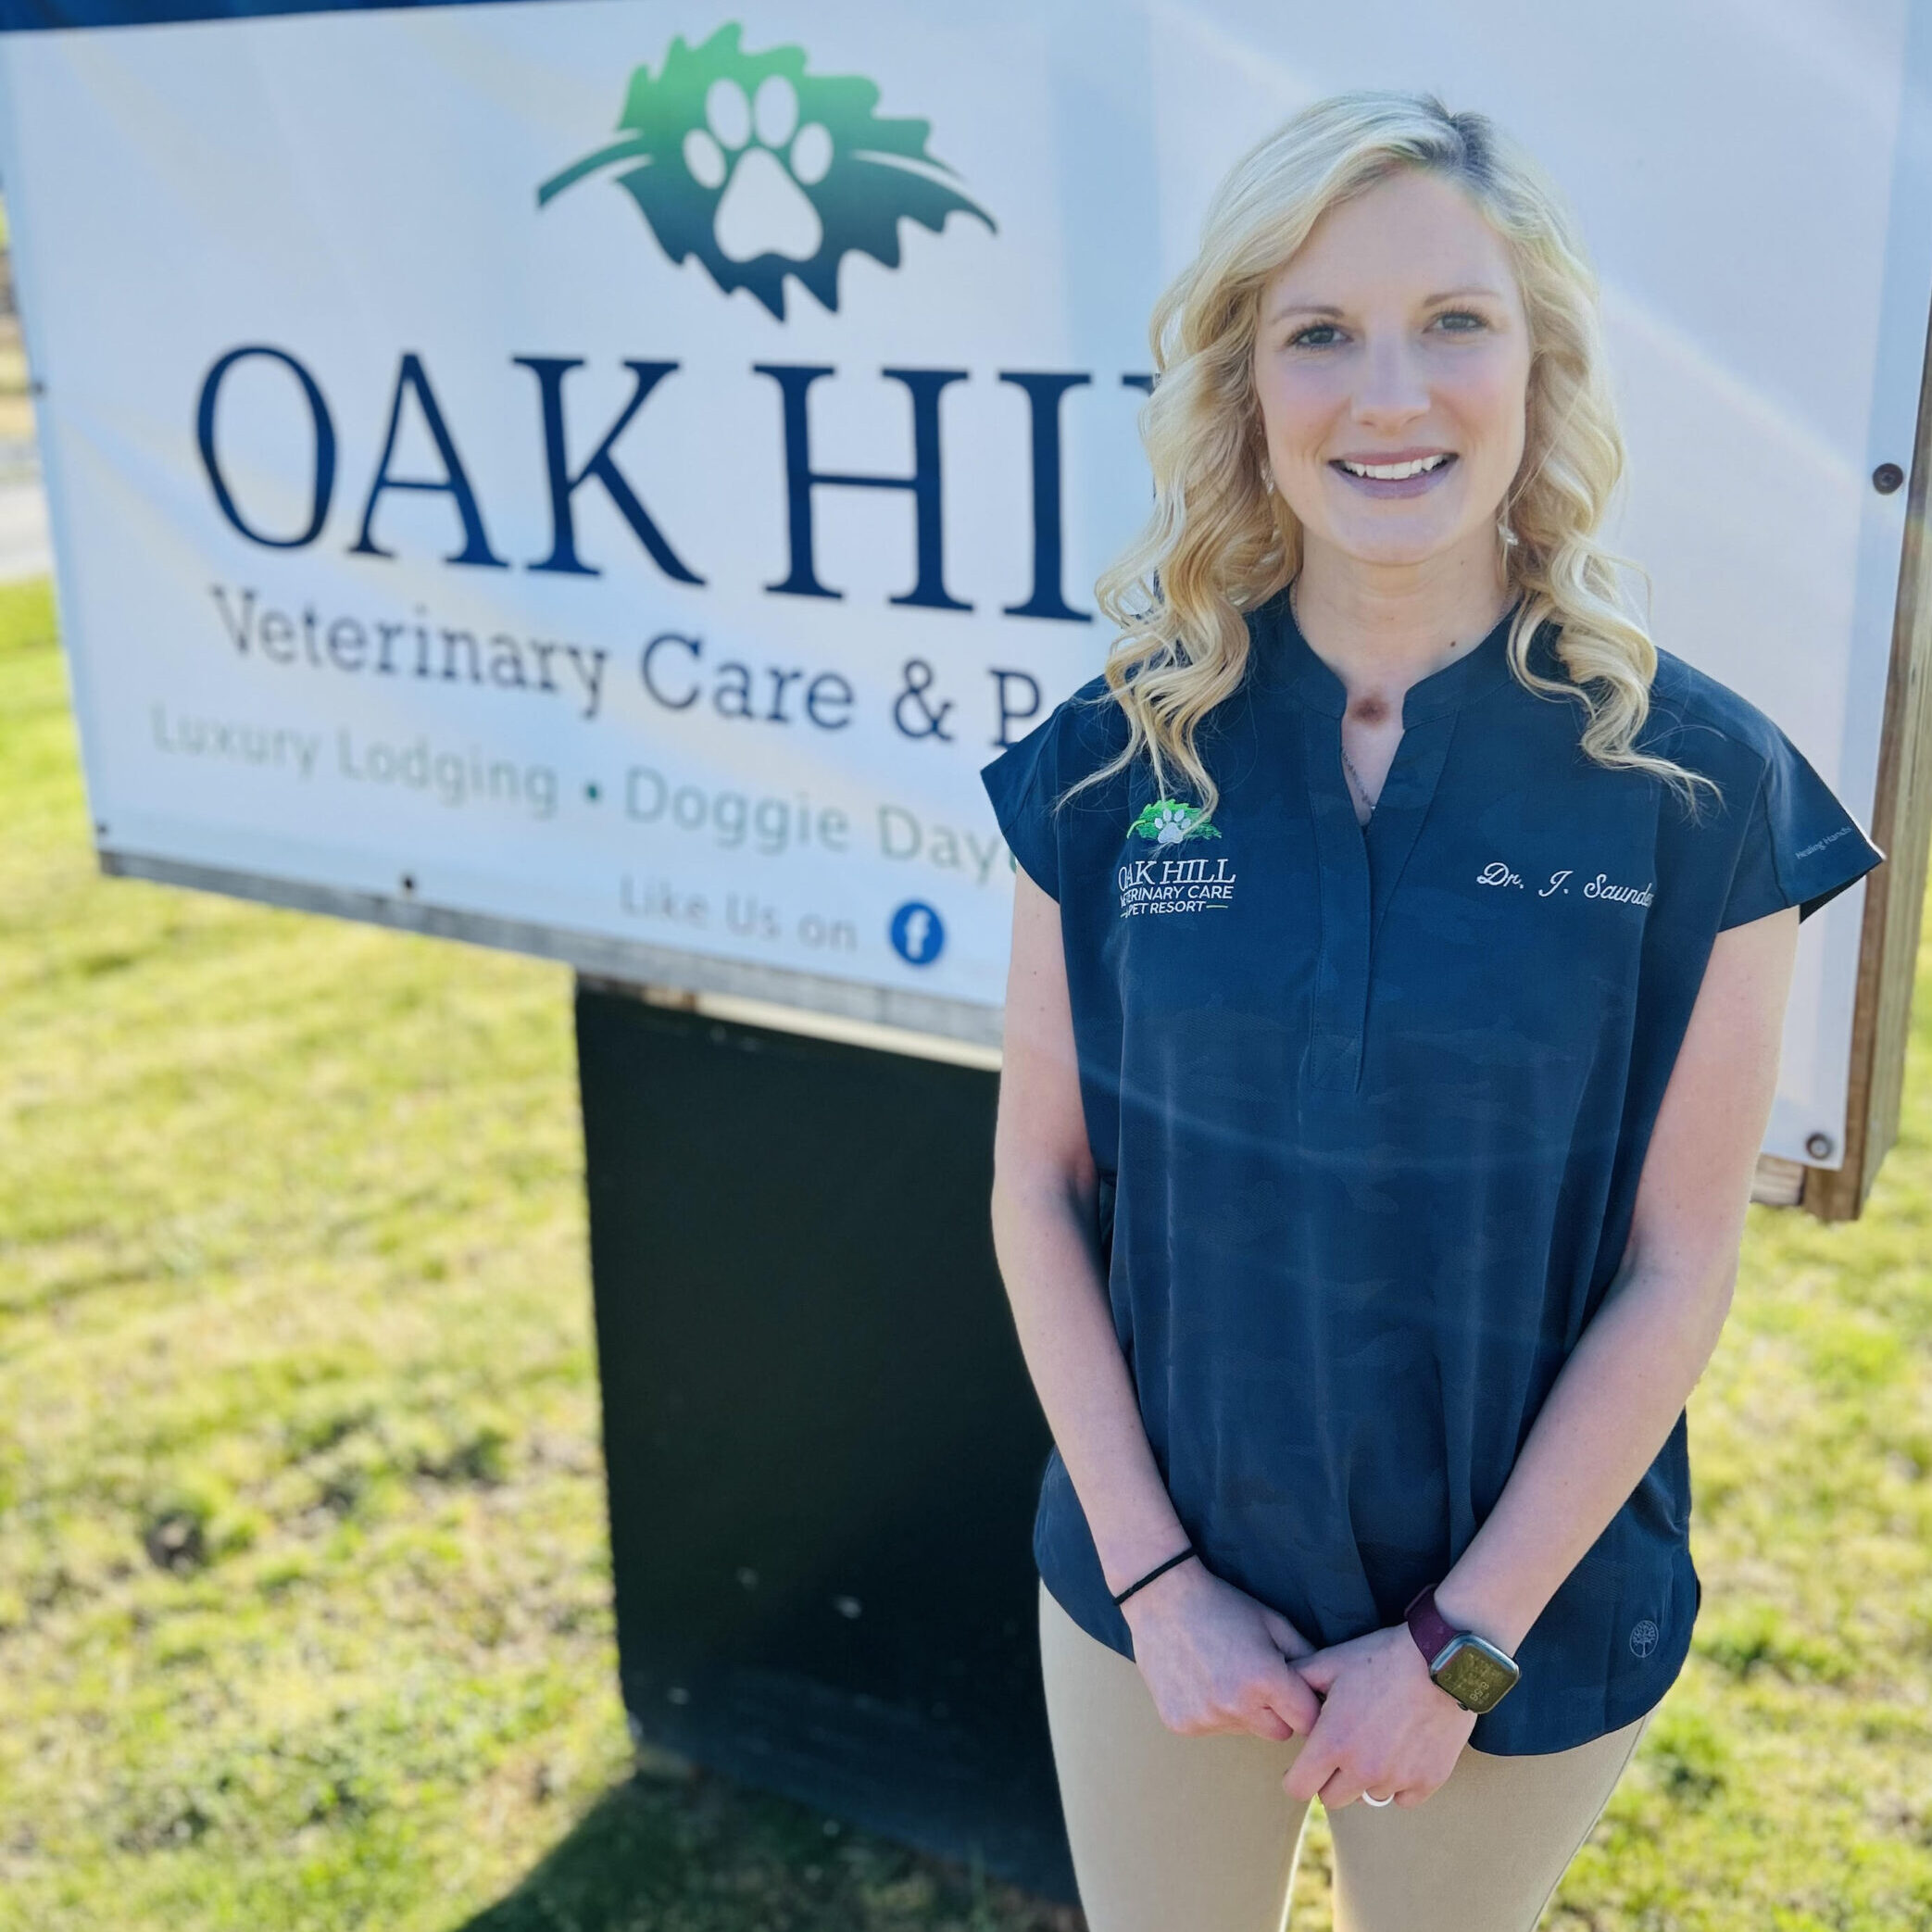 About Oak Hill Veterinary Care & Pet Resort